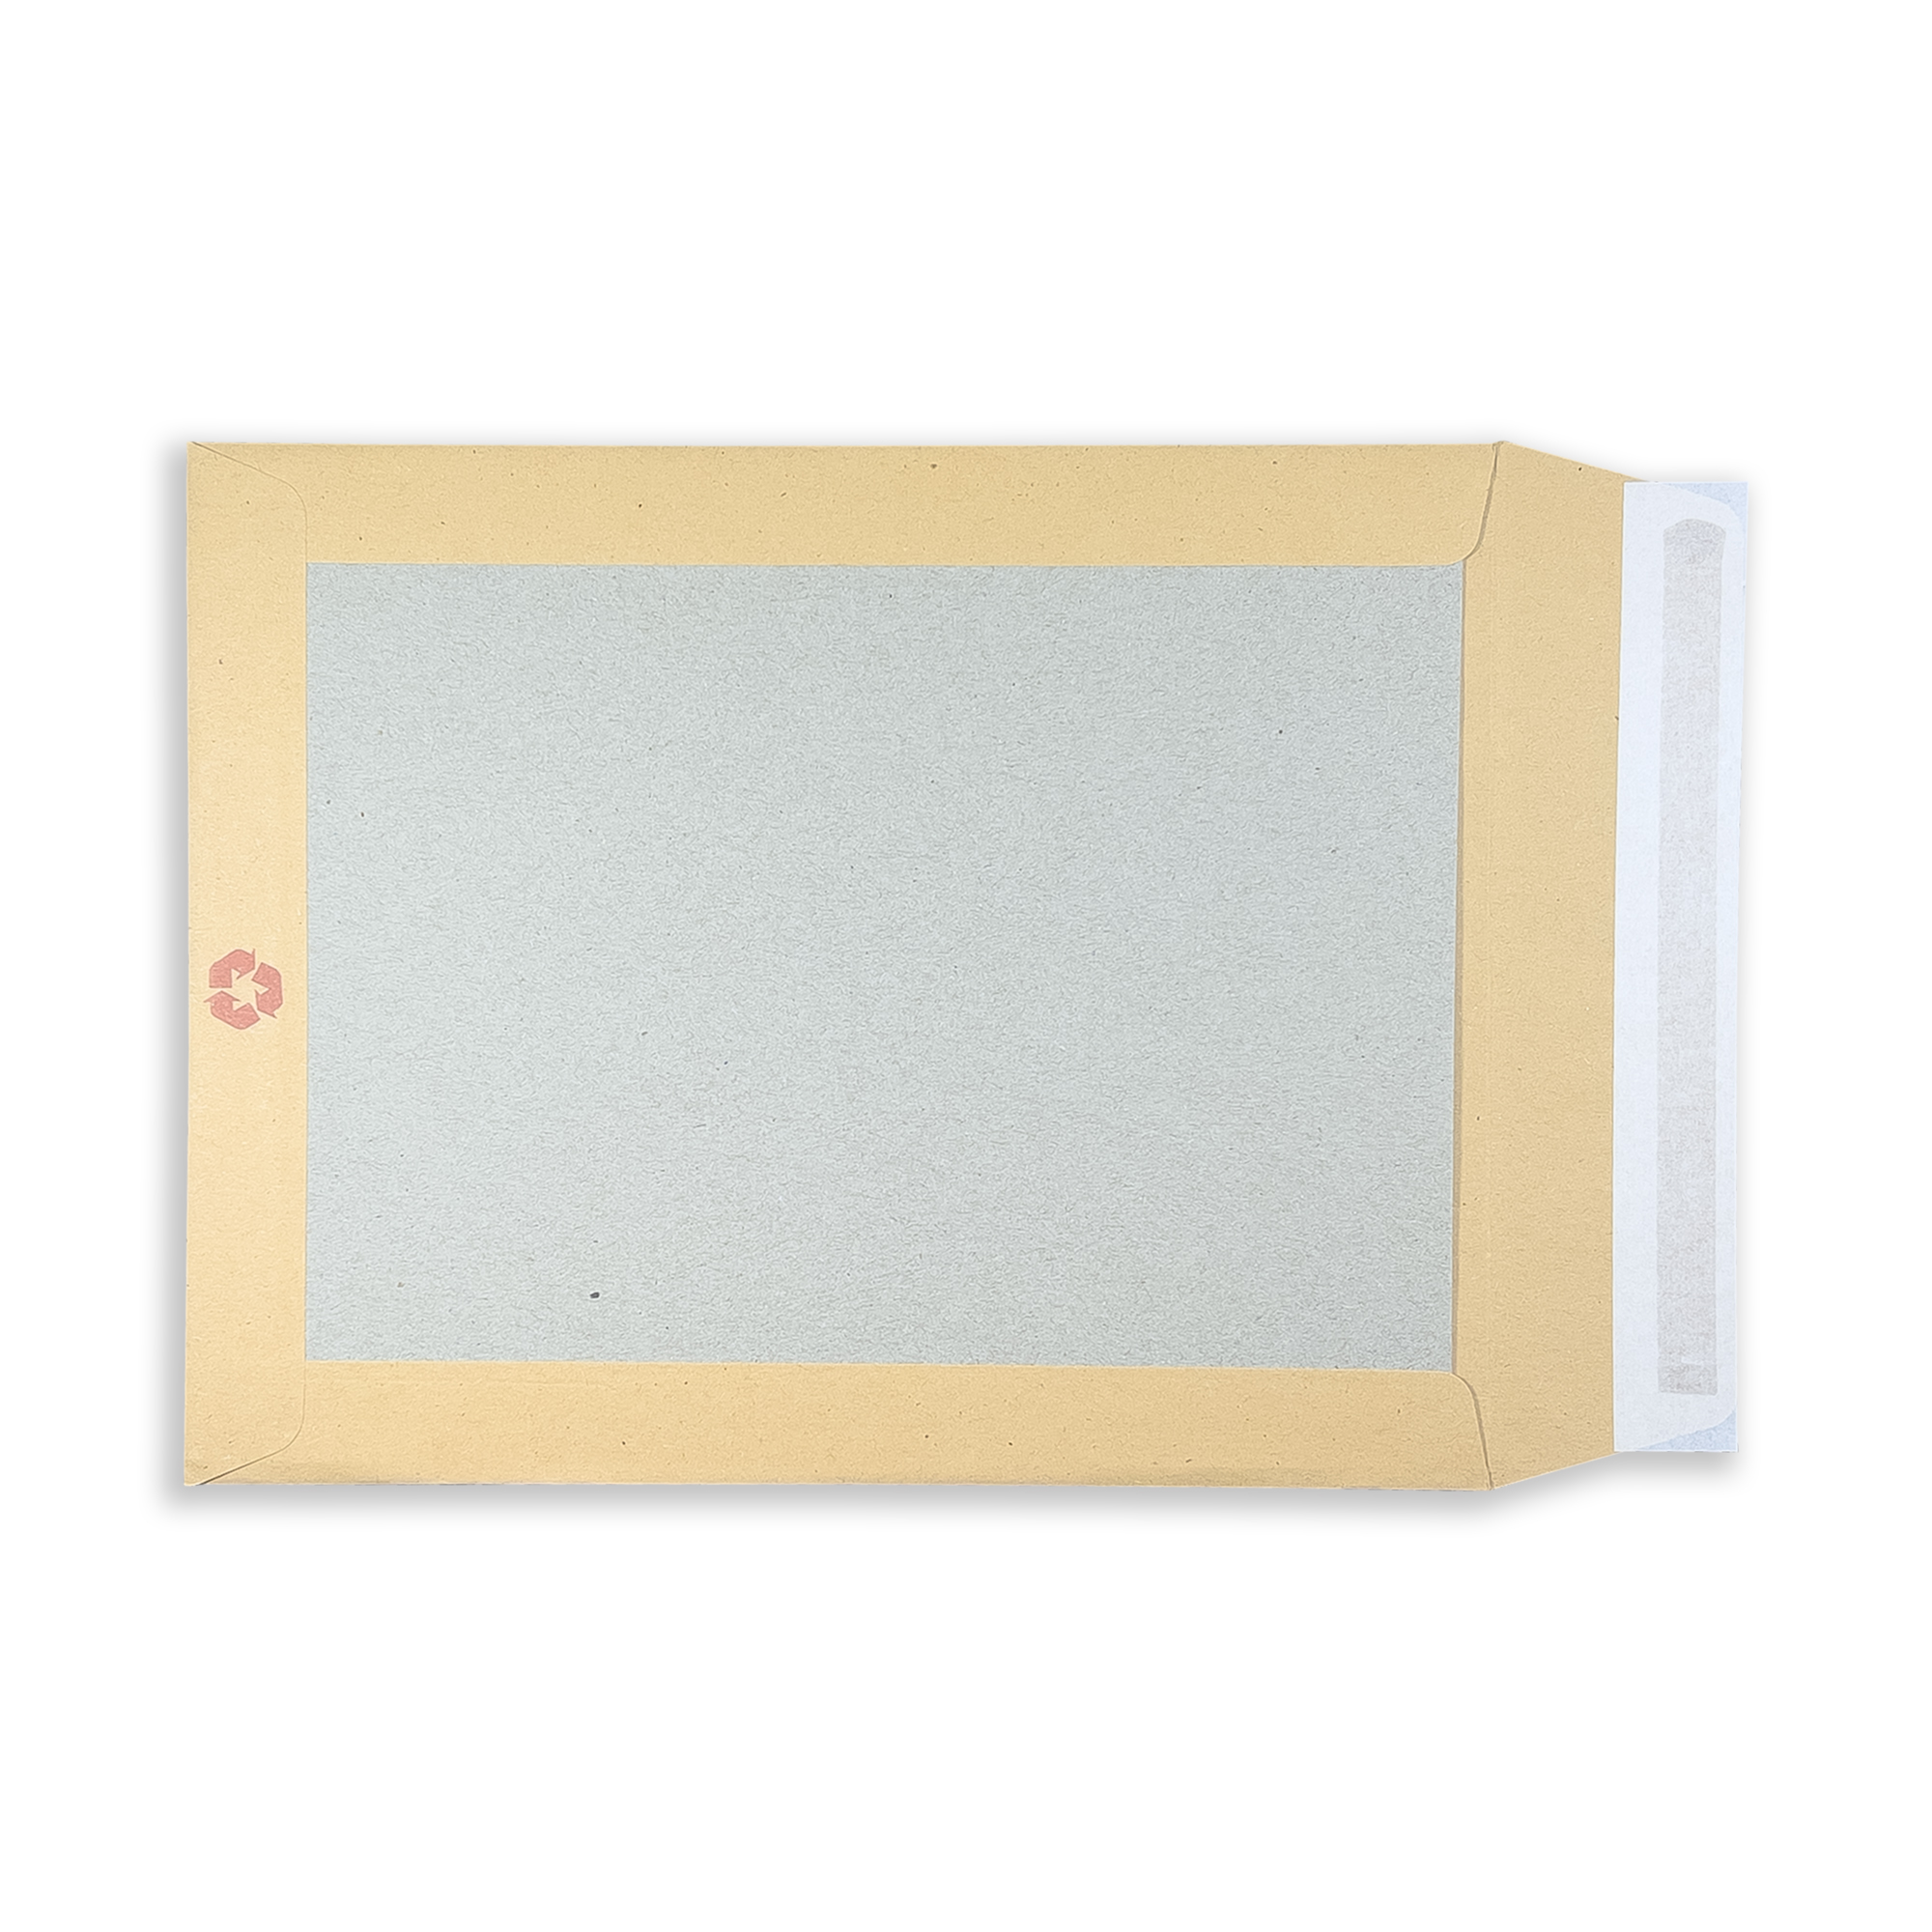 rectangle-manilla-please-do-not-bend-board-back-envelopes-back-flap-open